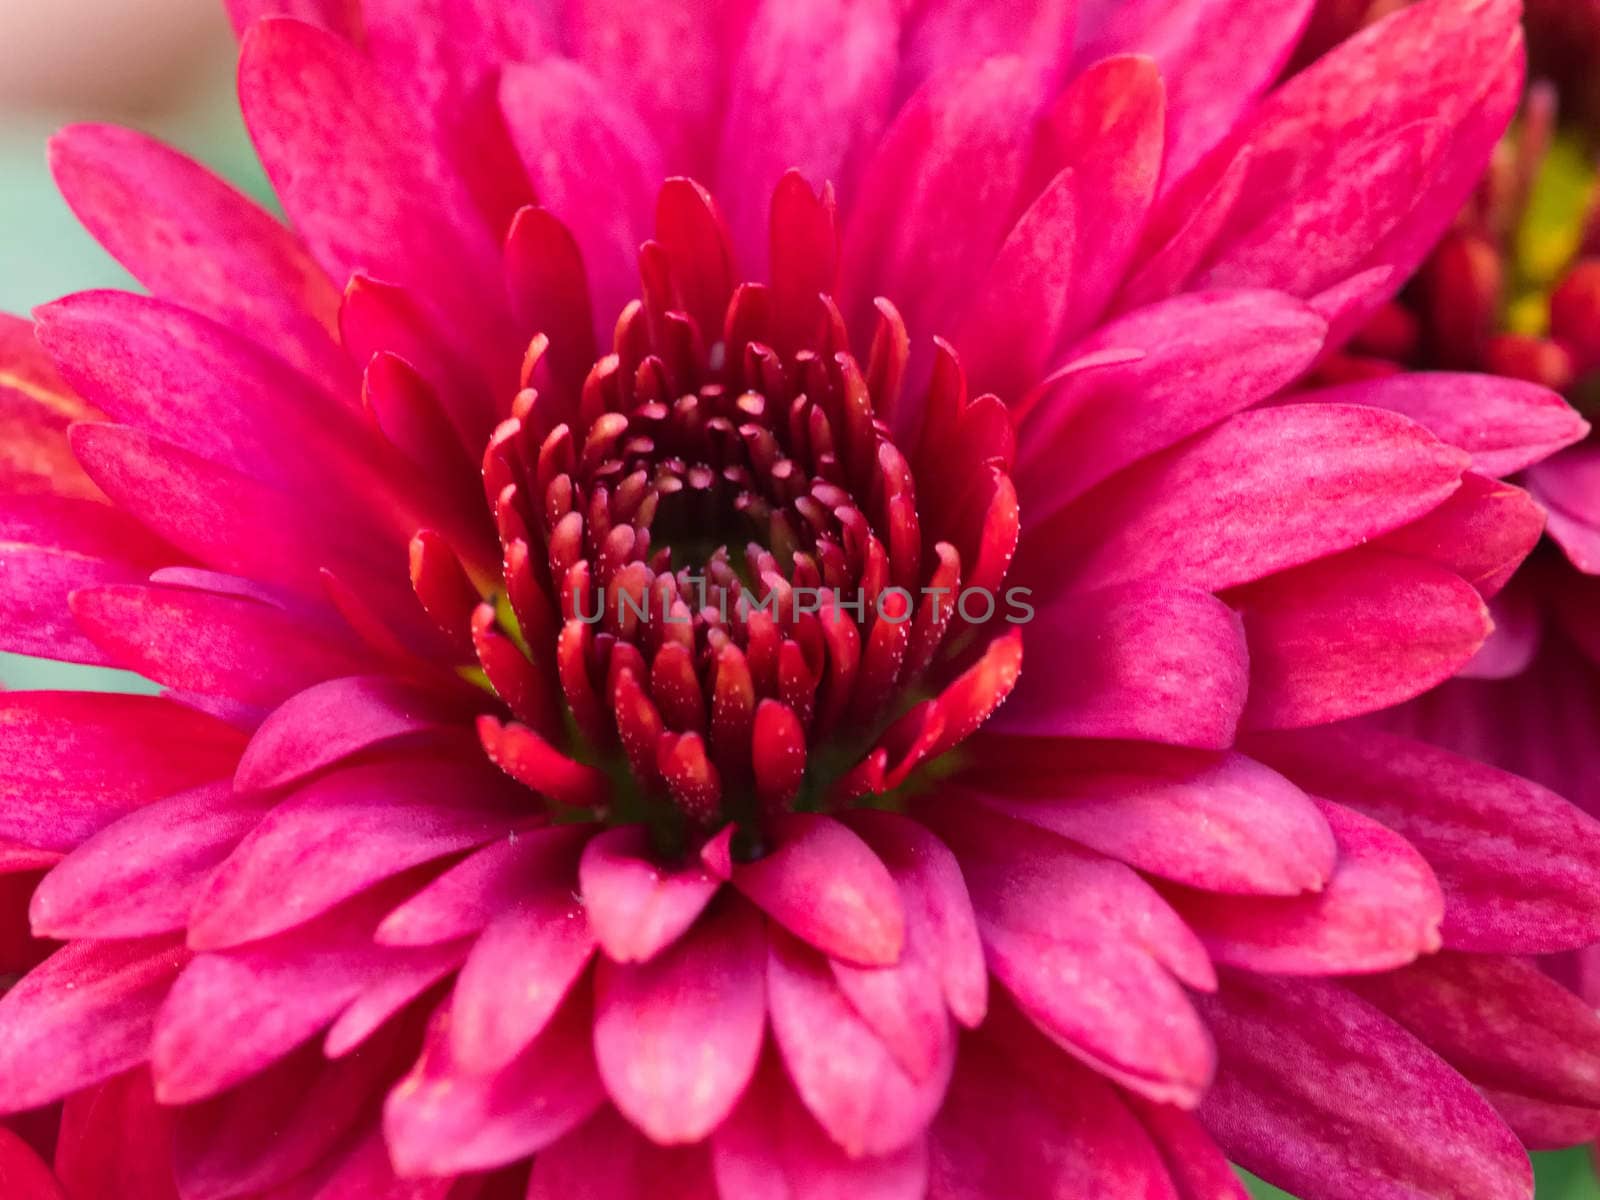 Chrysanthemum Daisy Close-up Shot, vibrant and bright